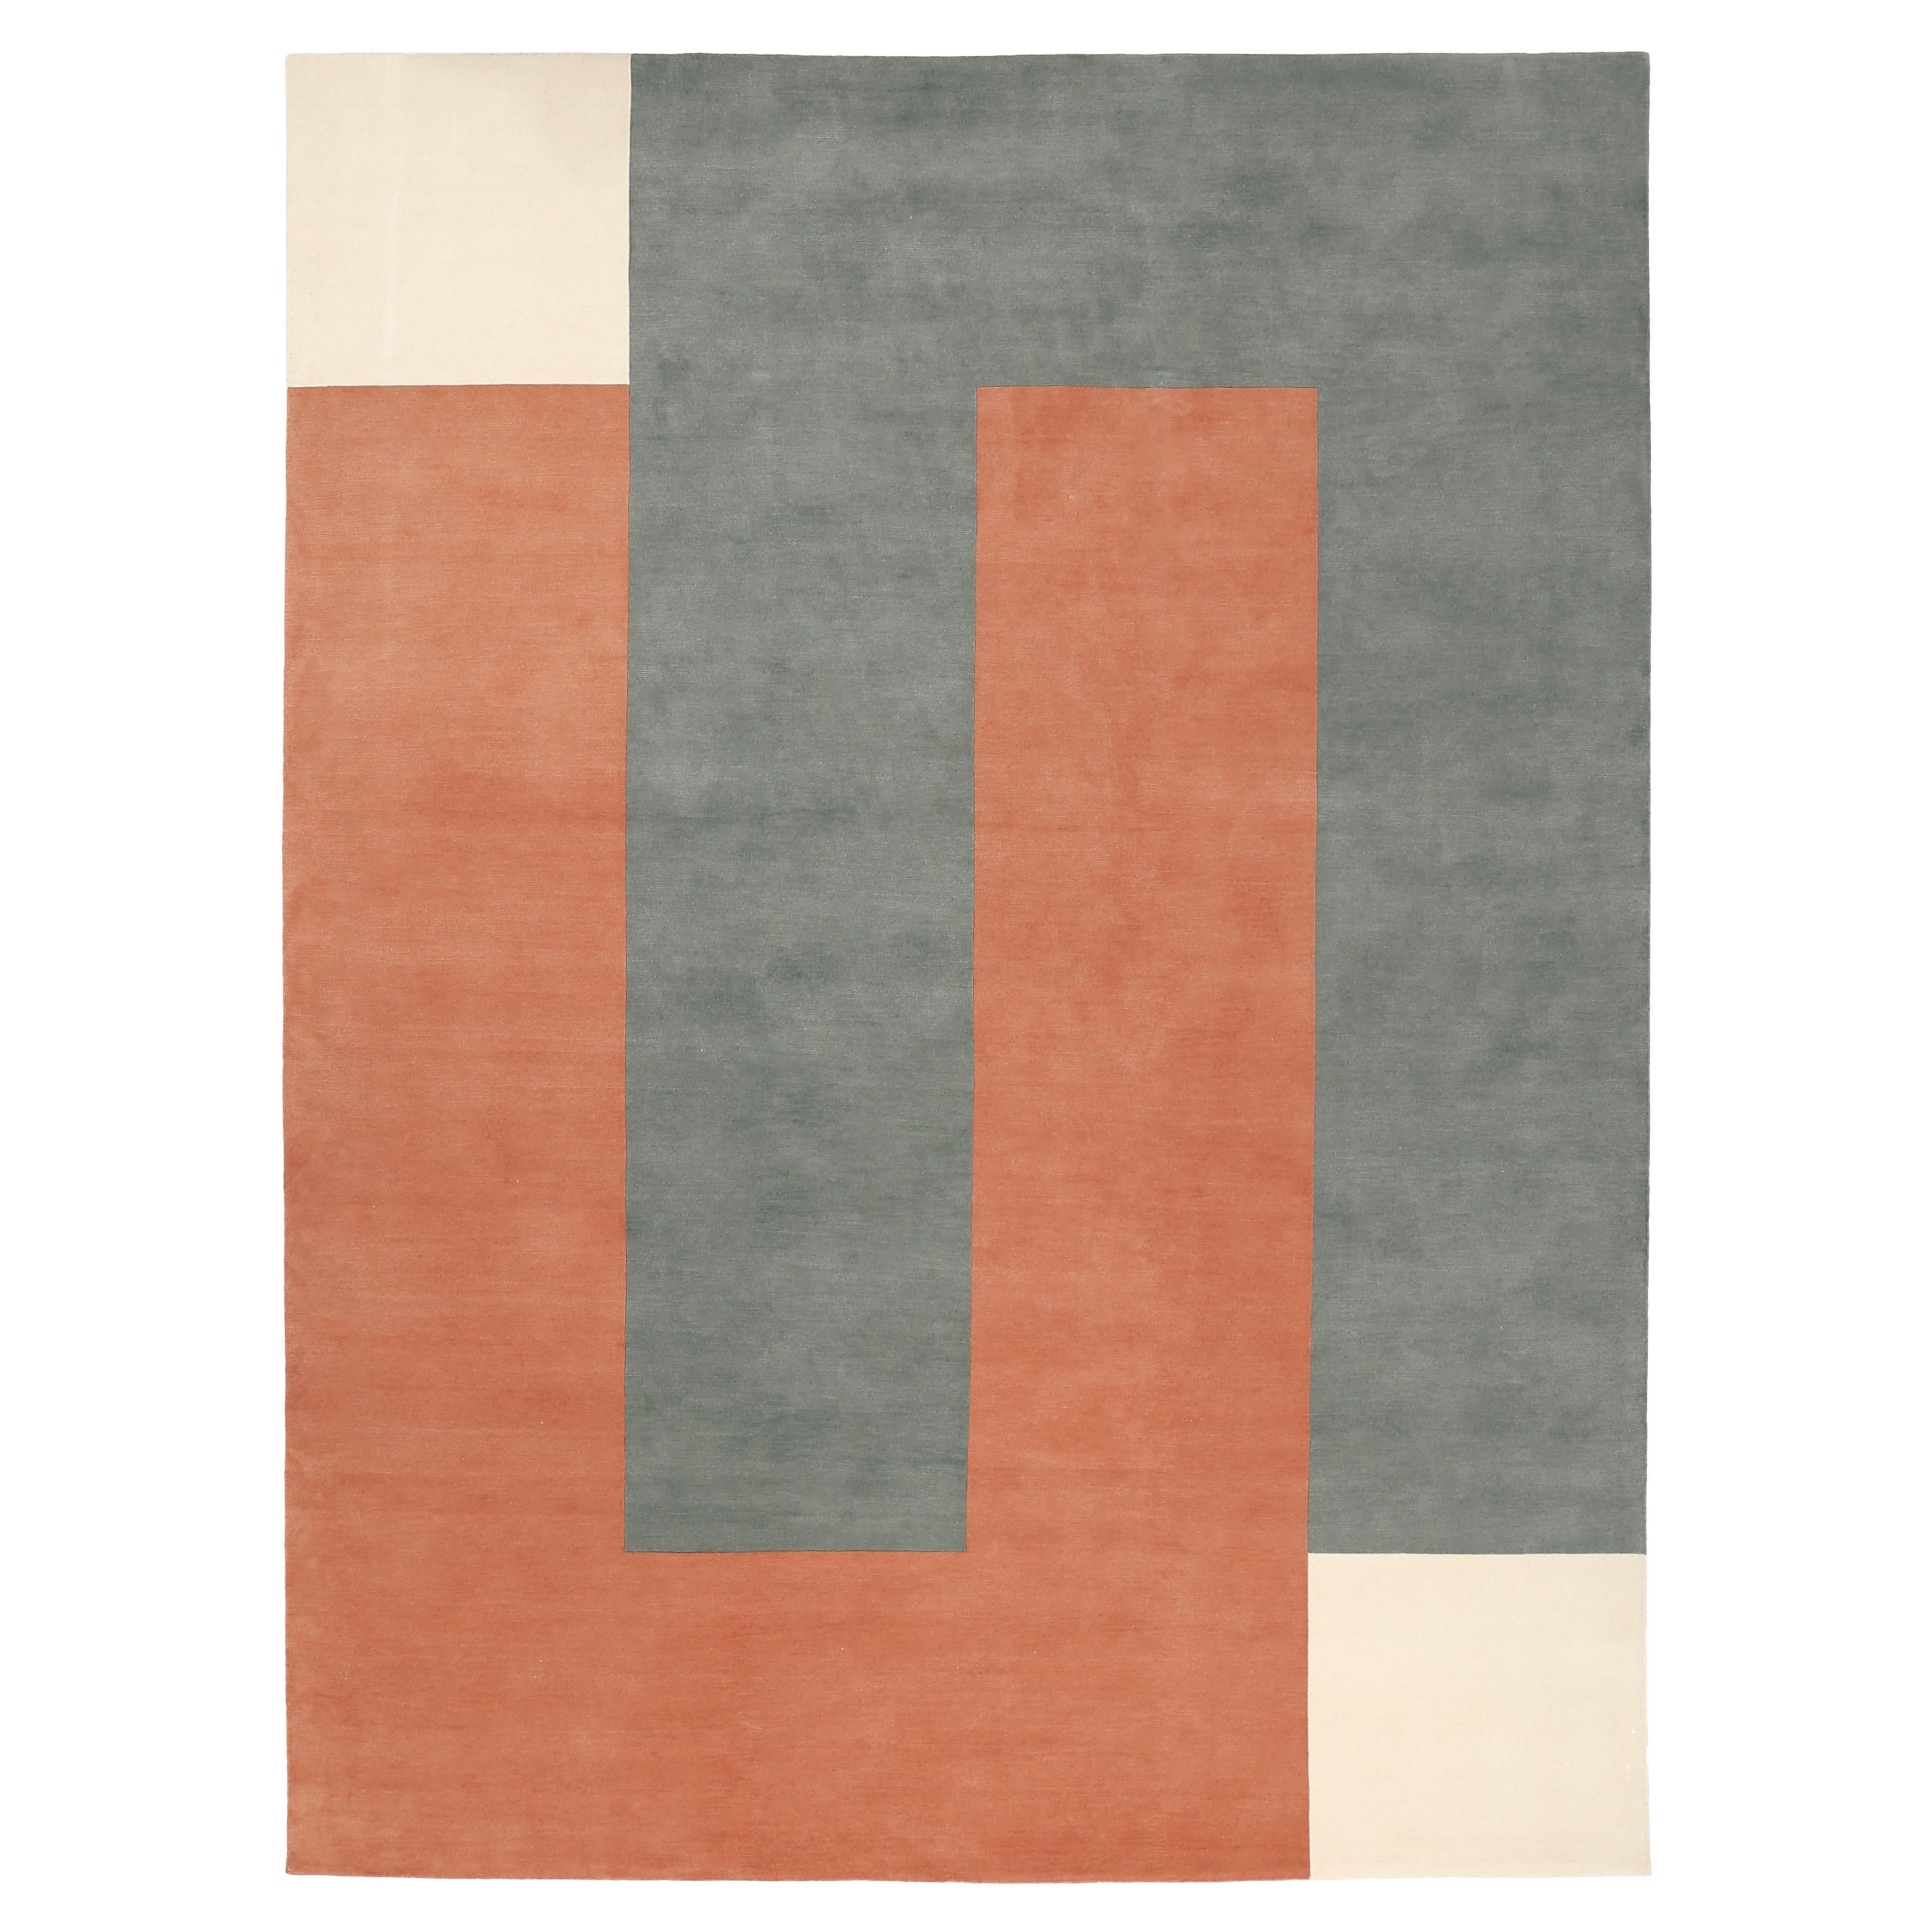 'Incastro' Design Carpet by Clara Bona for Alberto Levi Gallery